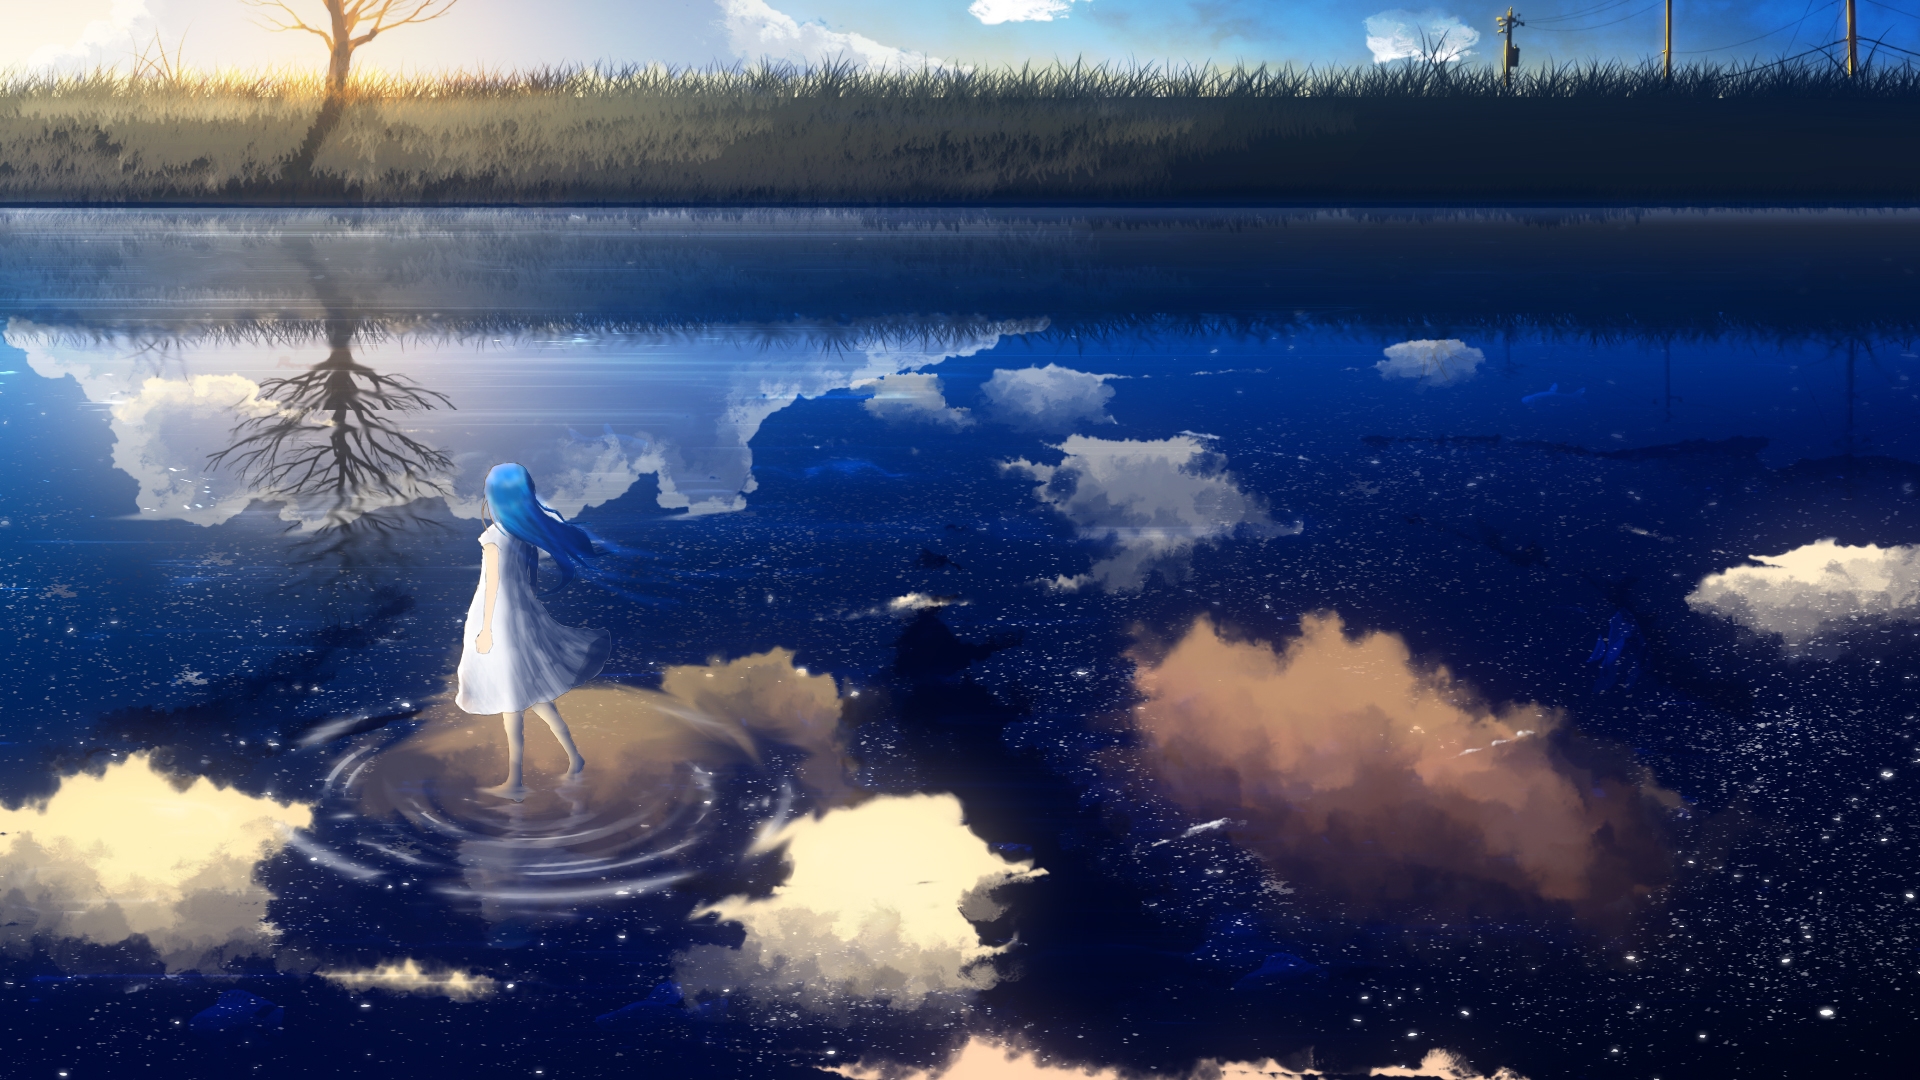 Wallpapers wallpaper anime girl walking on water reflection on the desktop